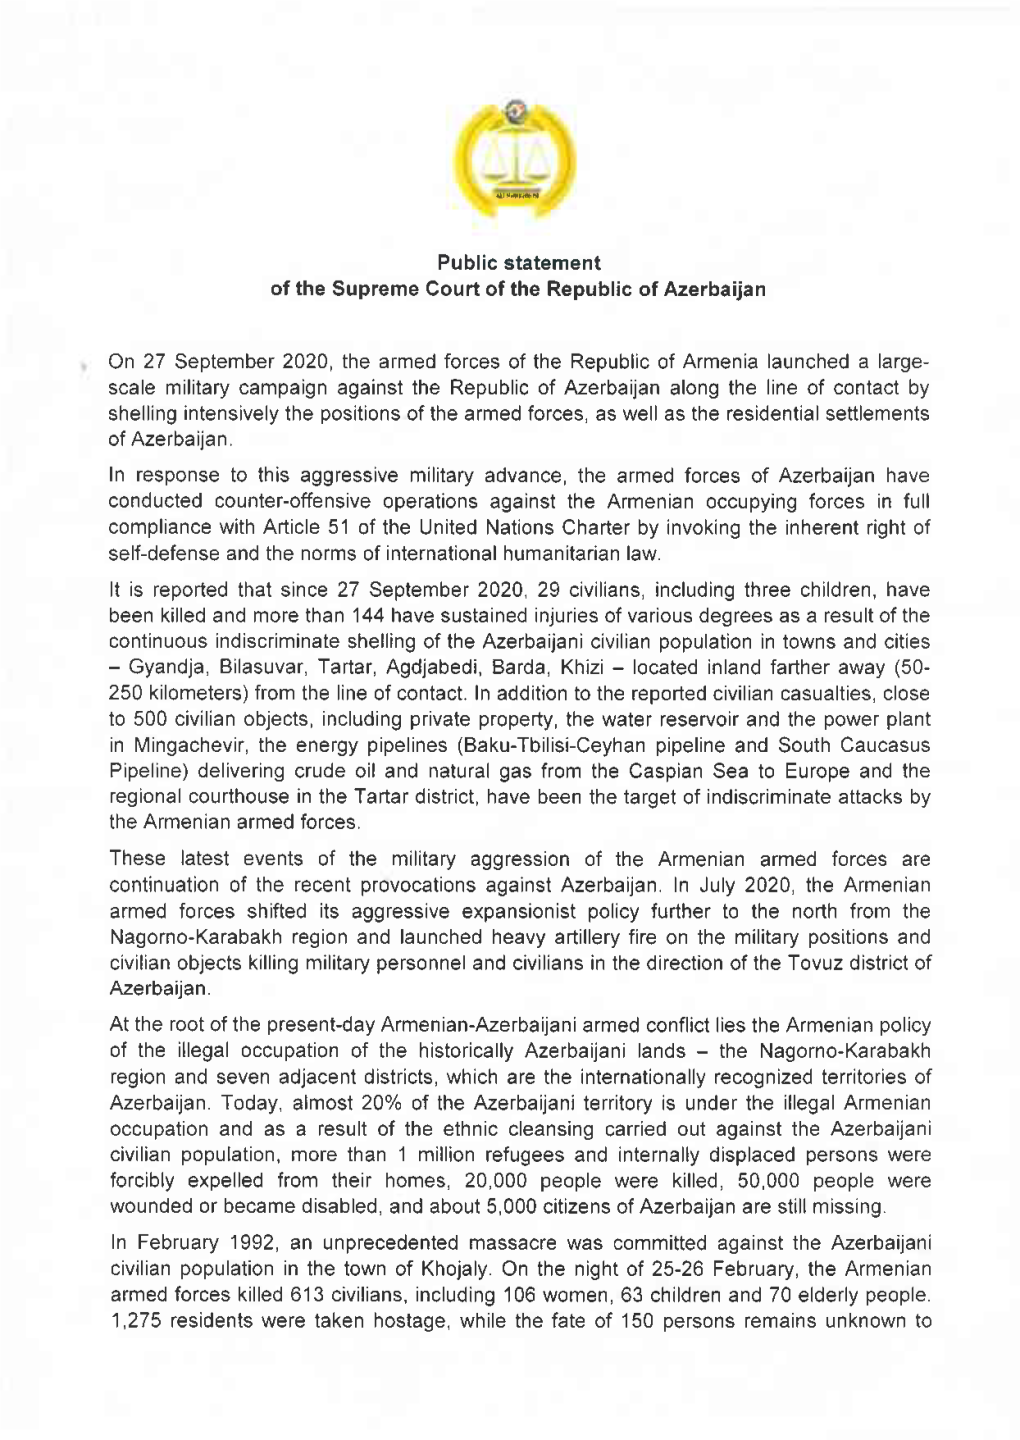 Public Statement of the Supreme Court of the Republic of Azerbaijan